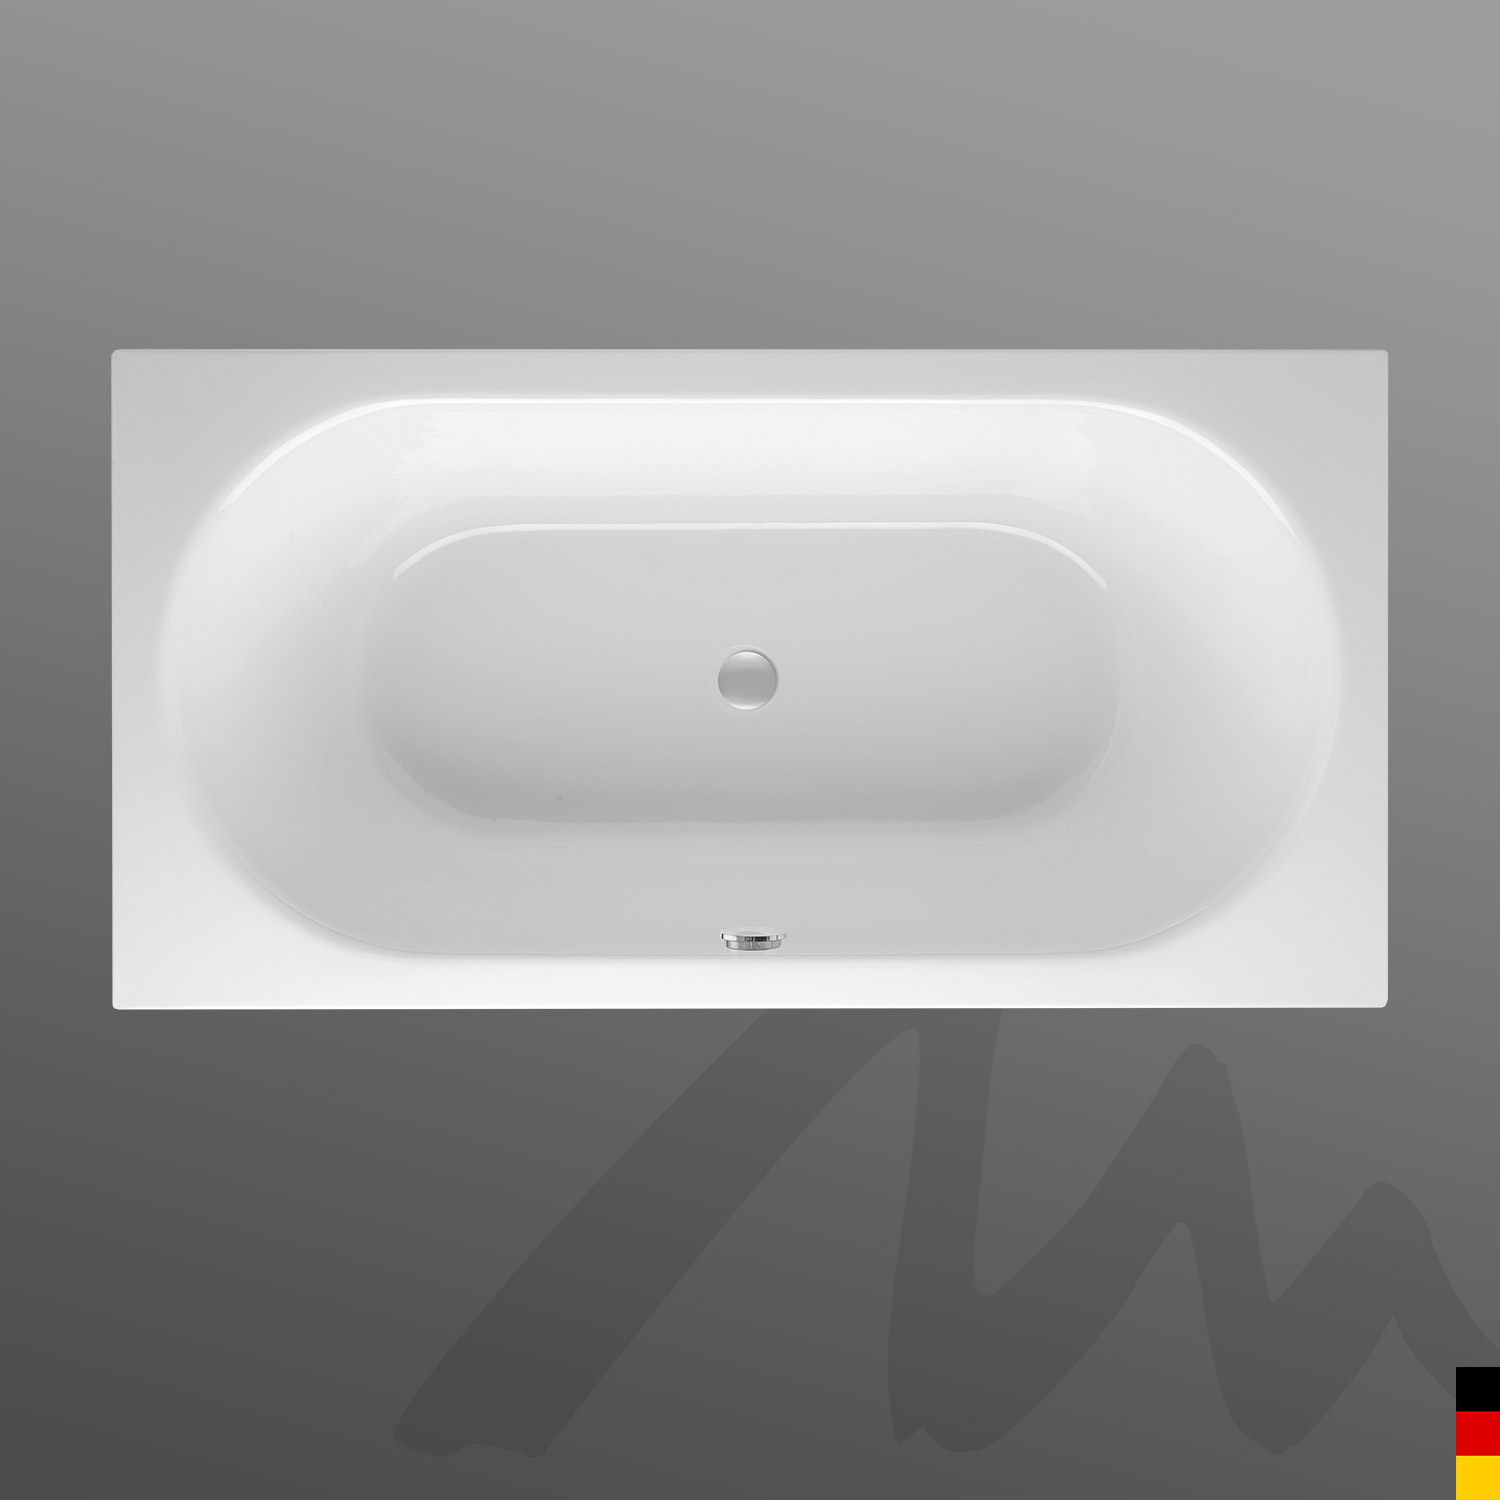 Mauersberger Badewanne Rechteck Ausana 185/95 duo  185x95x46cm  Farbe:Farbgr.2